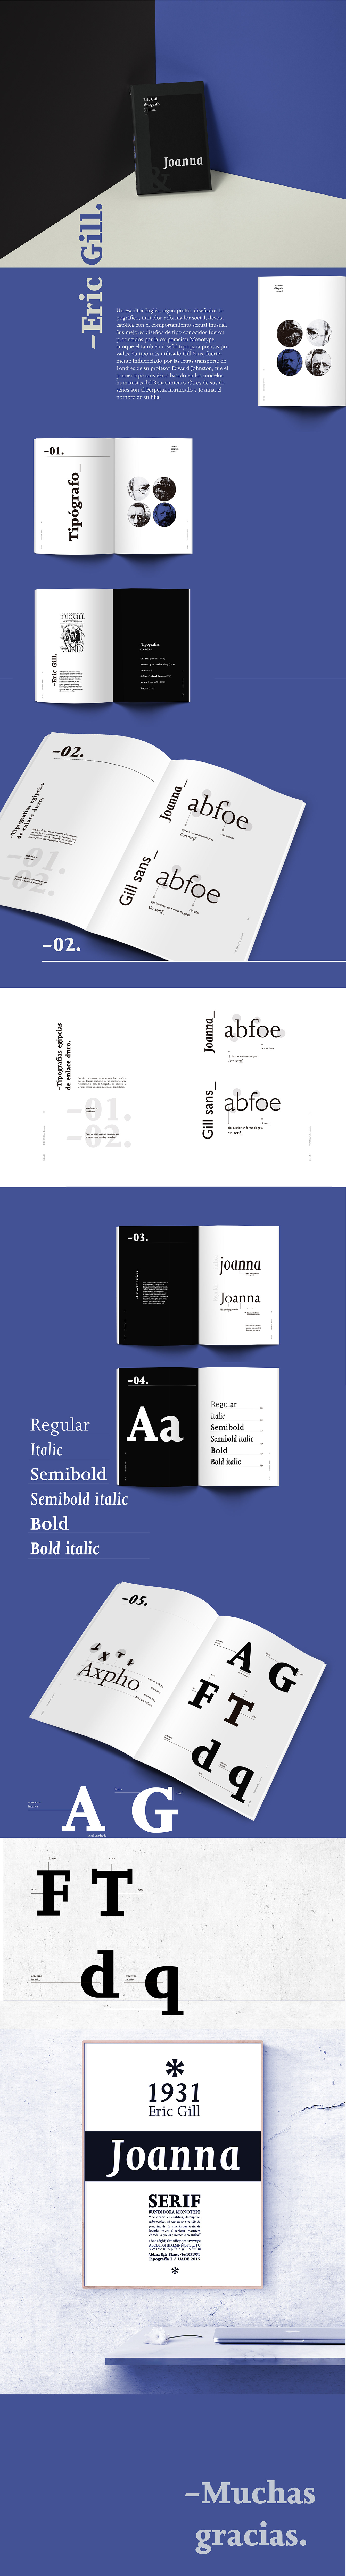 editorial tipografia poste diseño Eric Gill tipografo Joanna